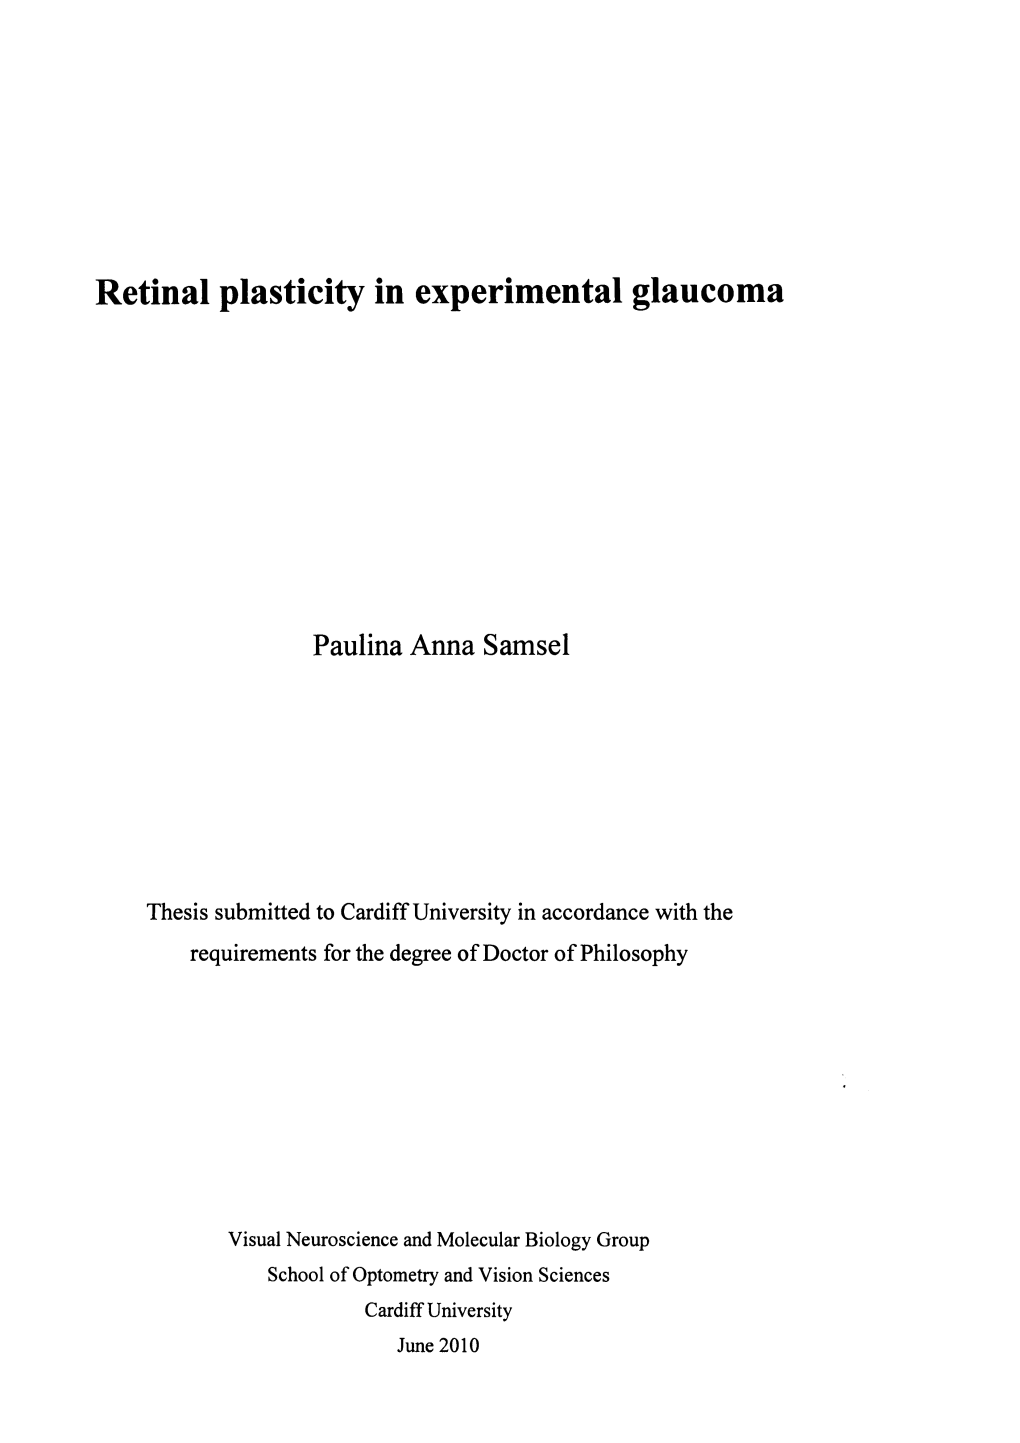 Retinal Plasticity in Experimental Glaucoma